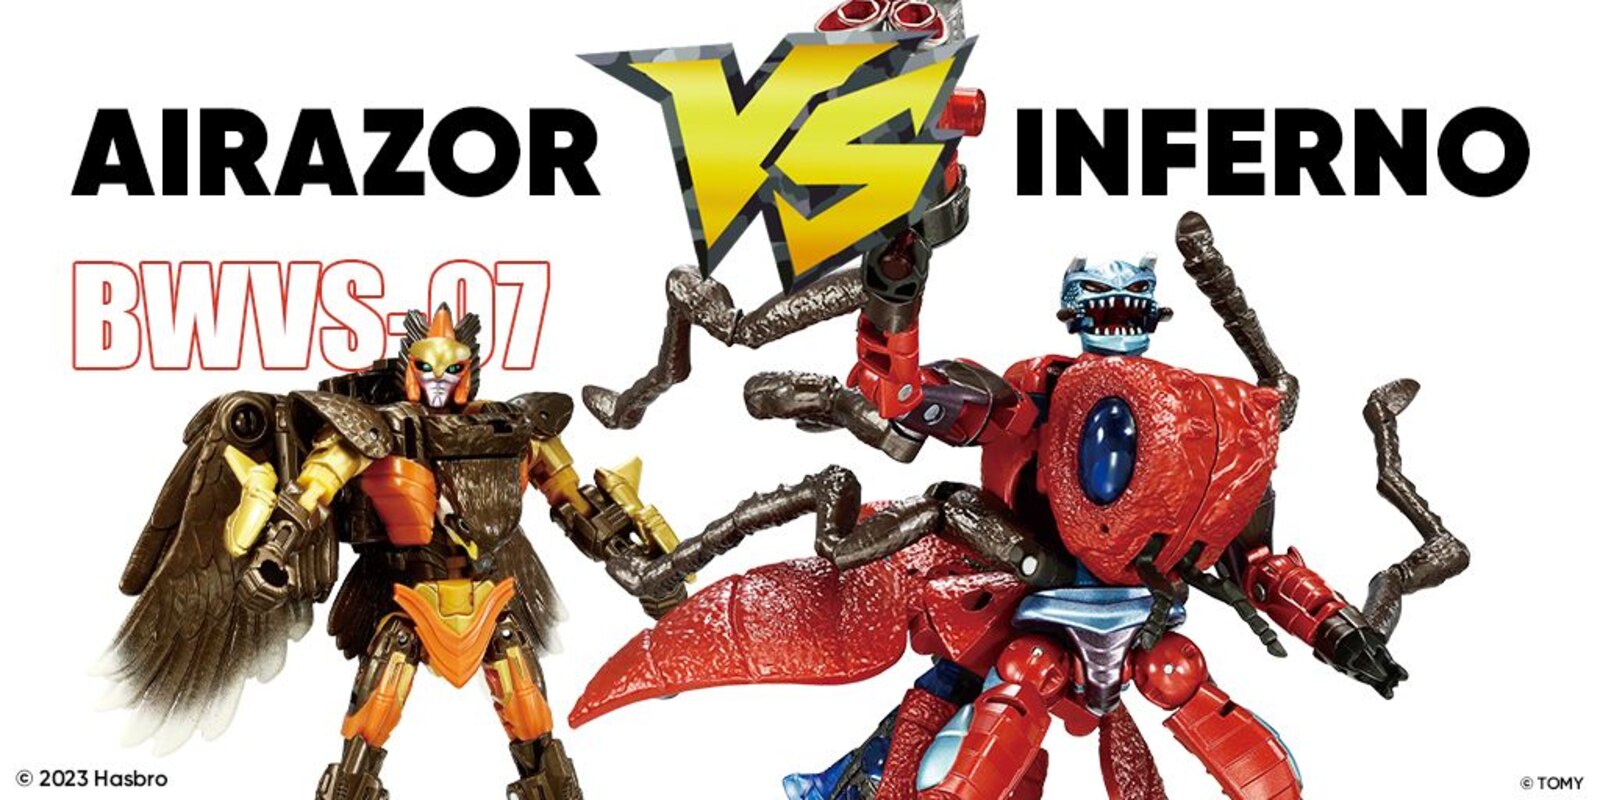 BWVS-07 Airazor Vs Inferno Transformers Loyal Showdown USA Preorders Open Now 